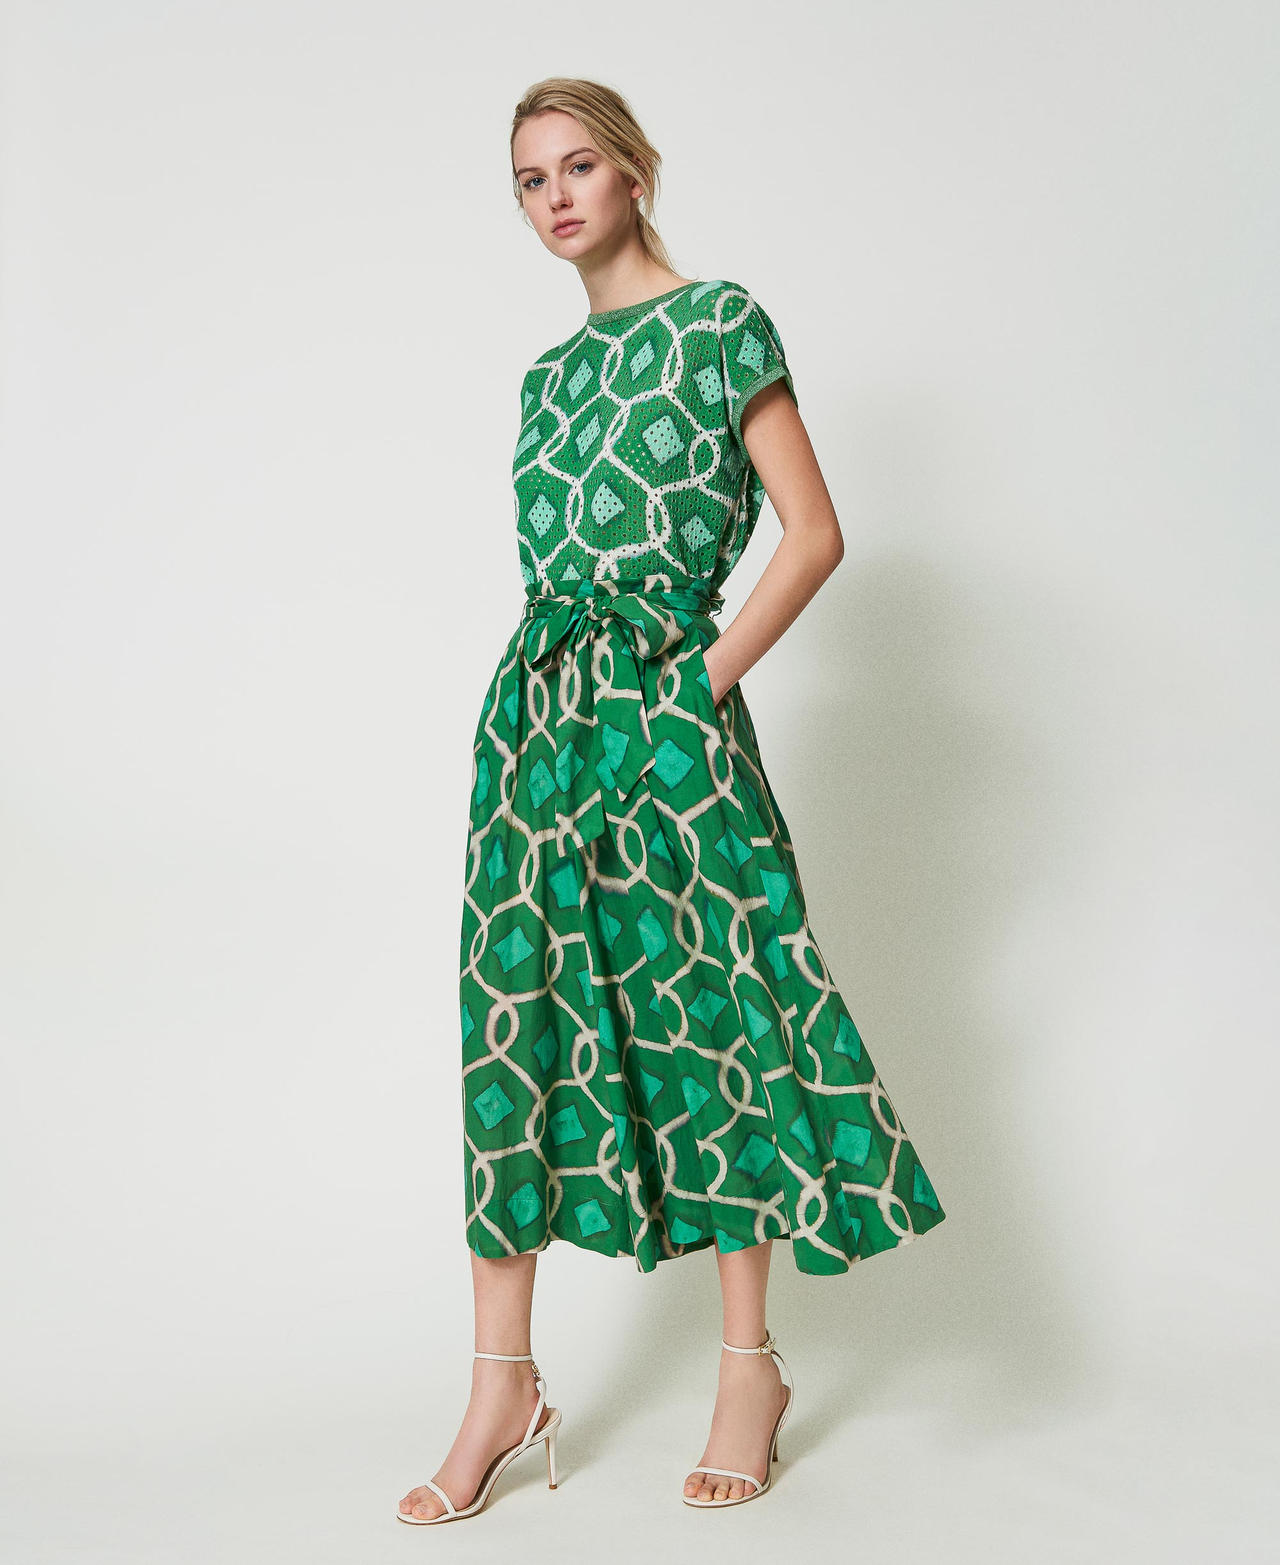 Jupe-culotte en mousseline imprimée Imprimé Fern Green Tile Femme 241AT2263-02